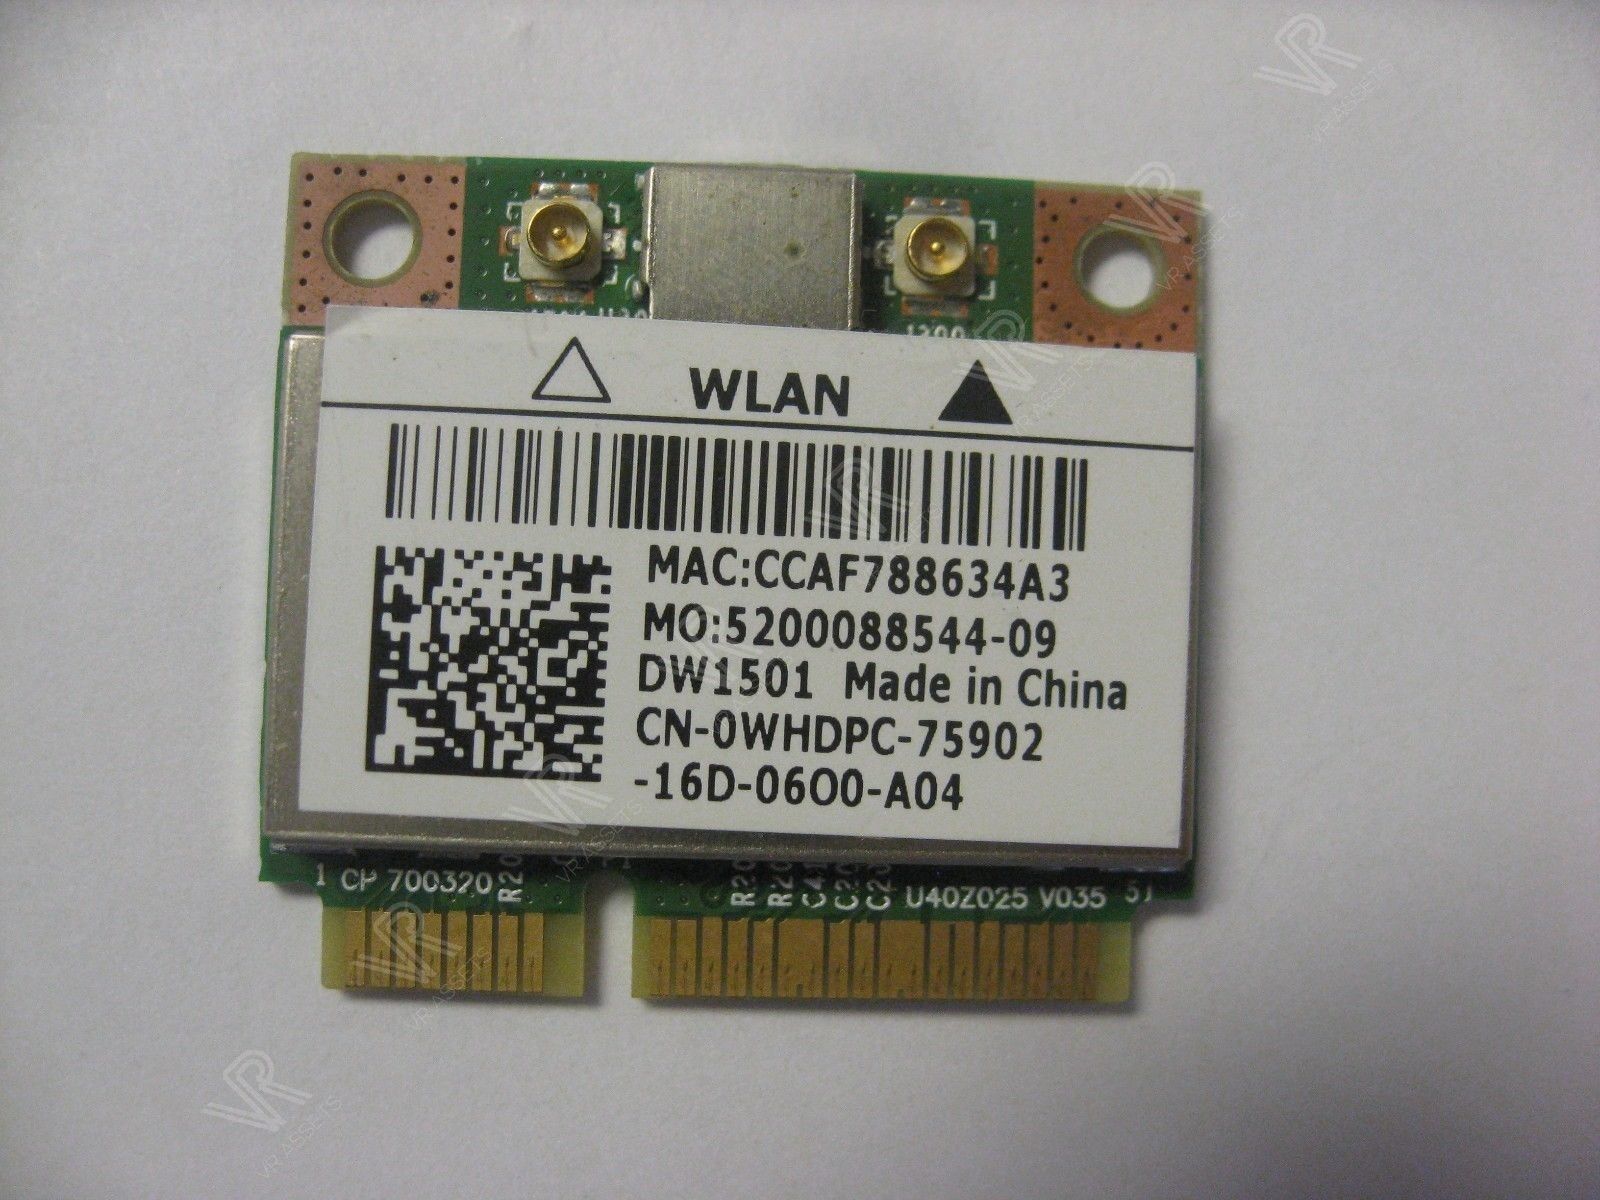 Dell WLAN Mini PCIExpress Card Broadcom DW1501 WiFi 802.11b/g/n WHDPC 0WHDPC